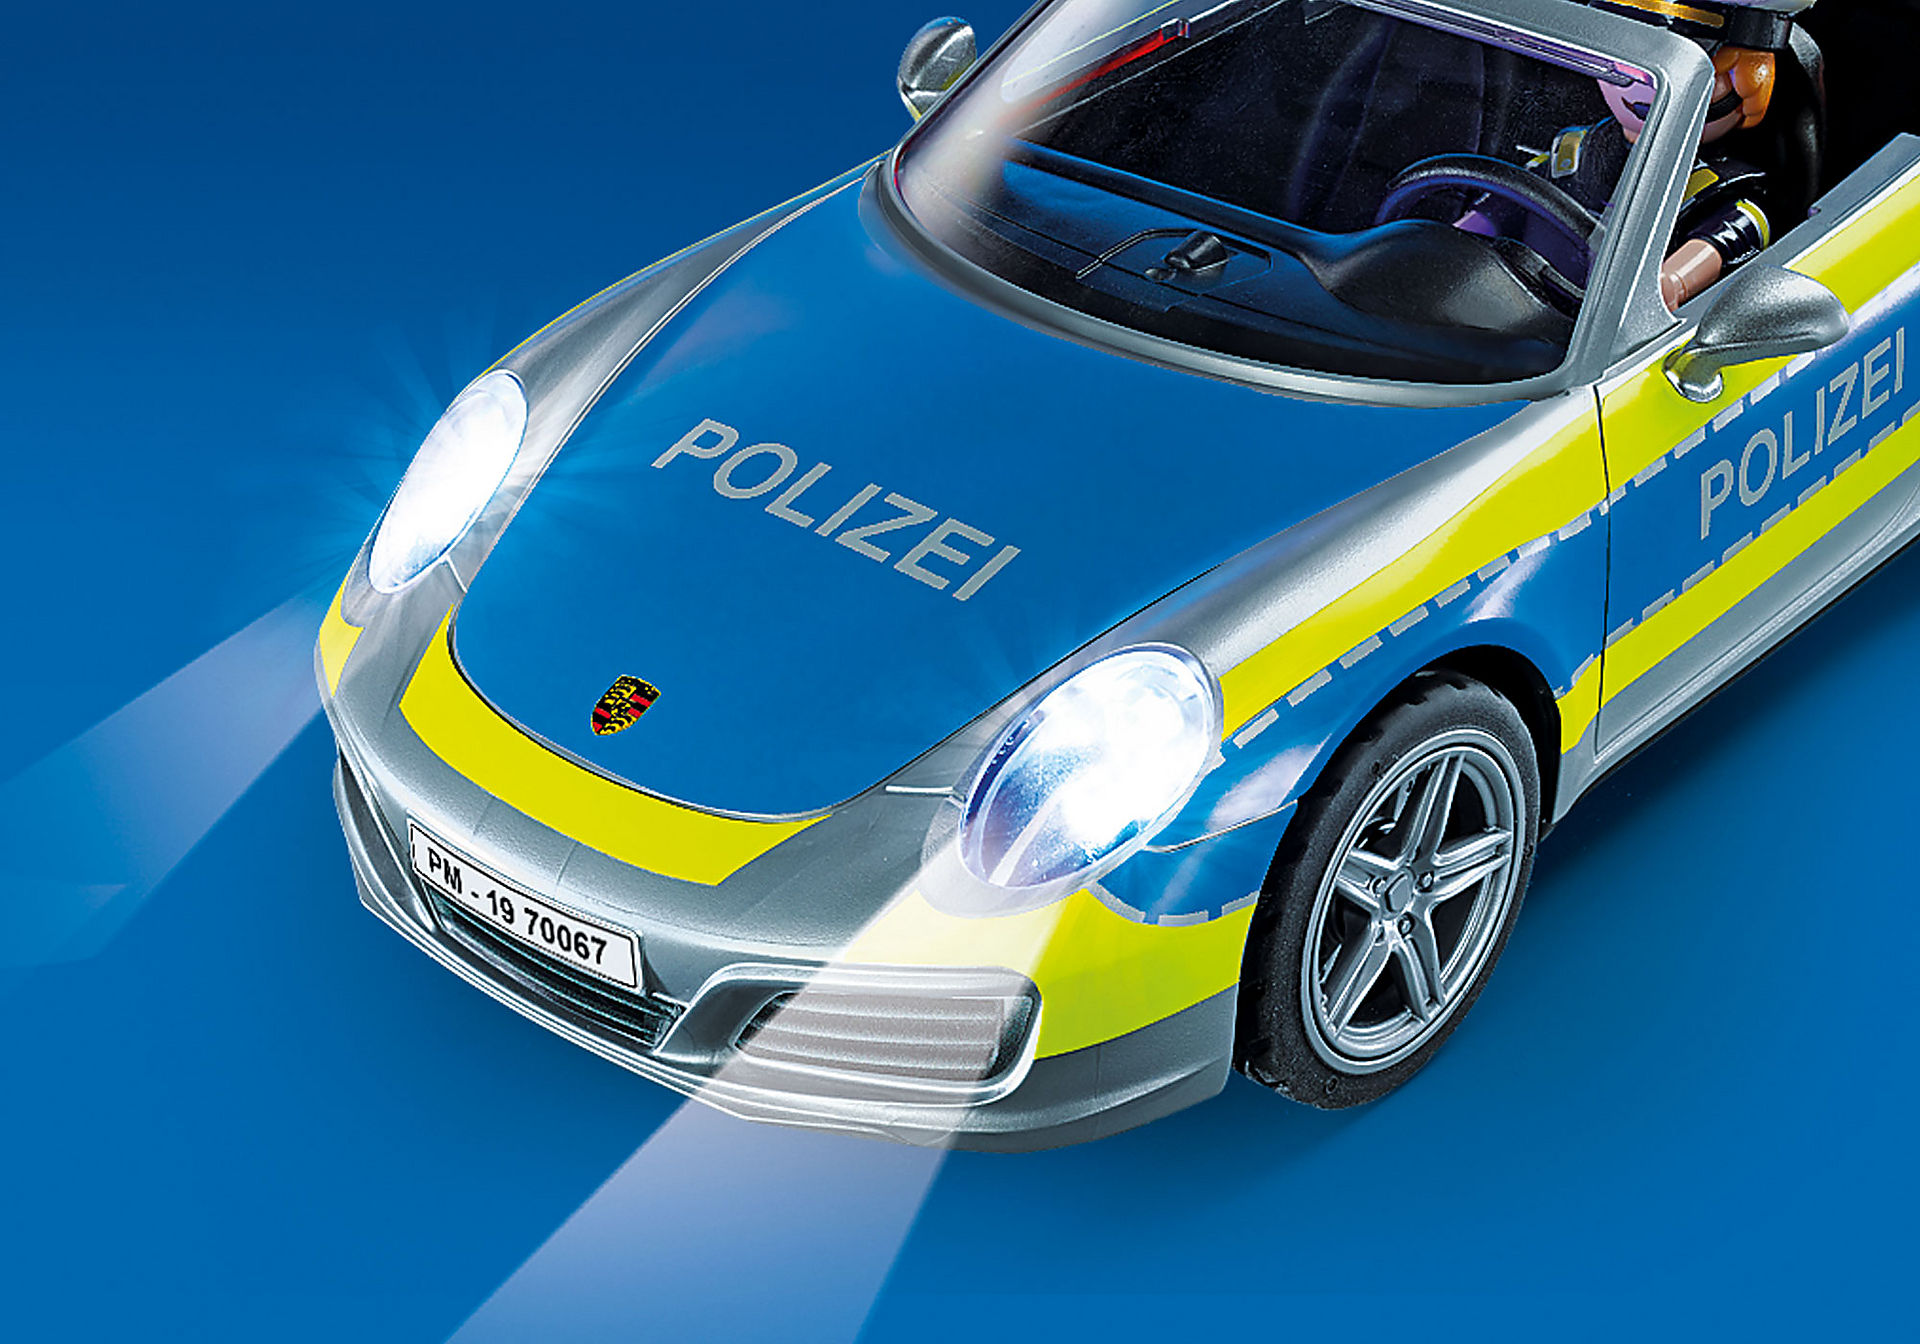 70067 Porsche 911 Carrera 4S Polizei zoom image5